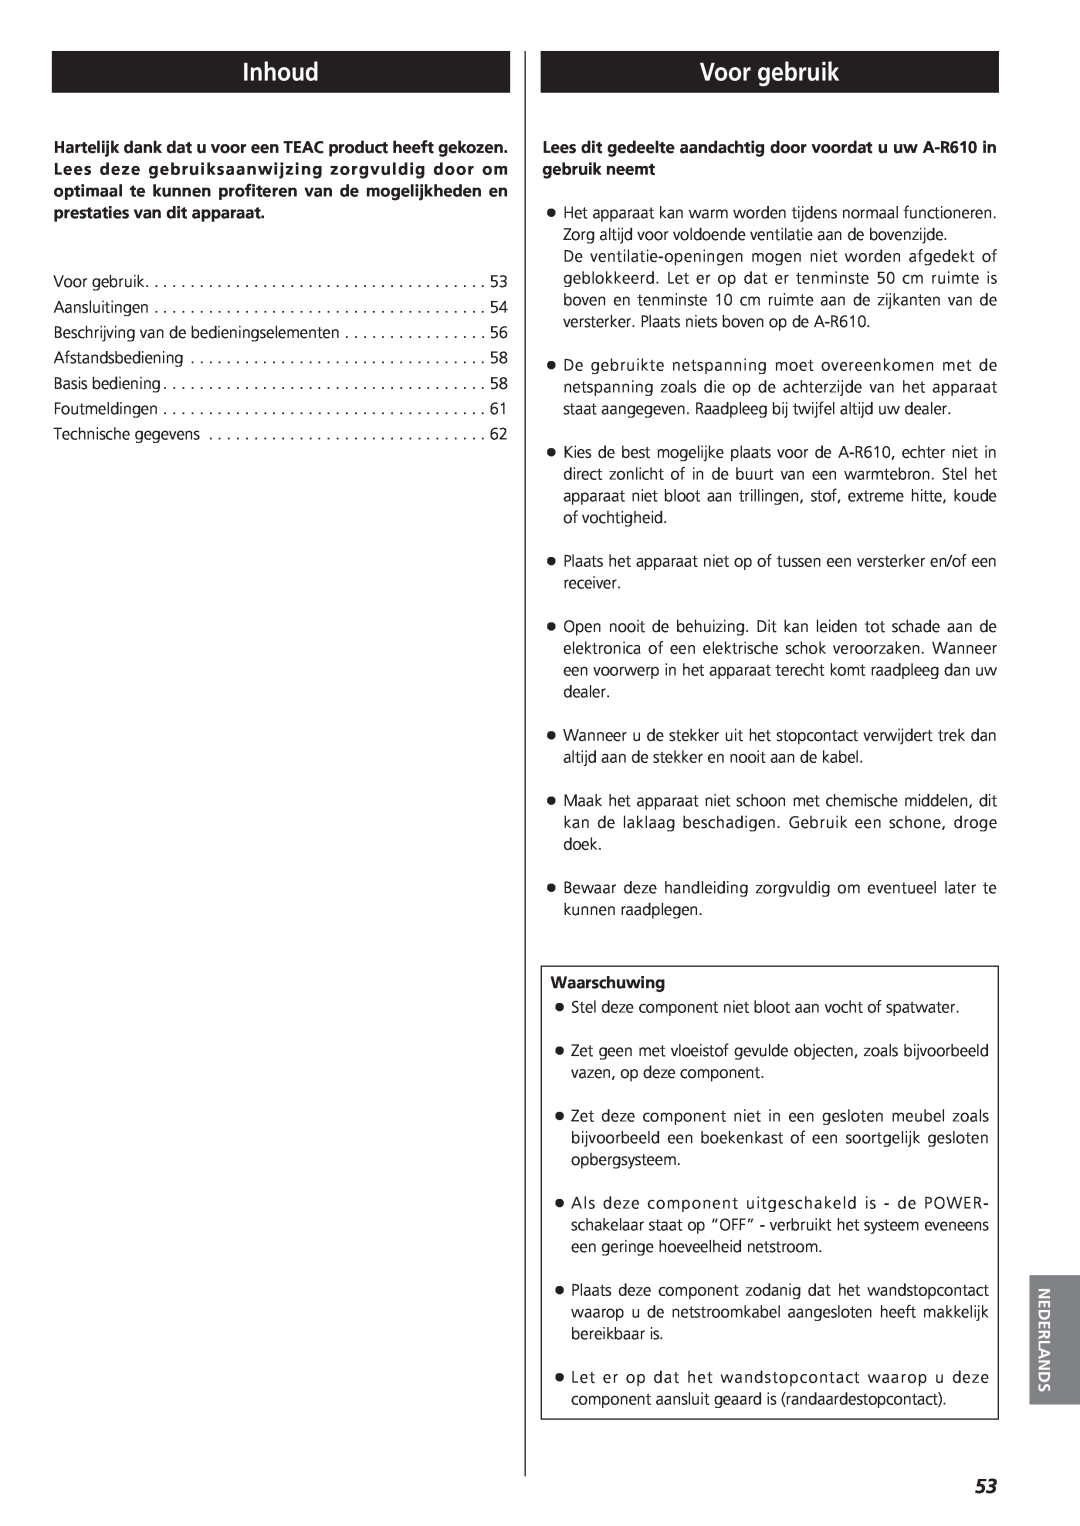 Teac A-R610 owner manual Inhoud, Voor gebruik, Waarschuwing, Nederlands 